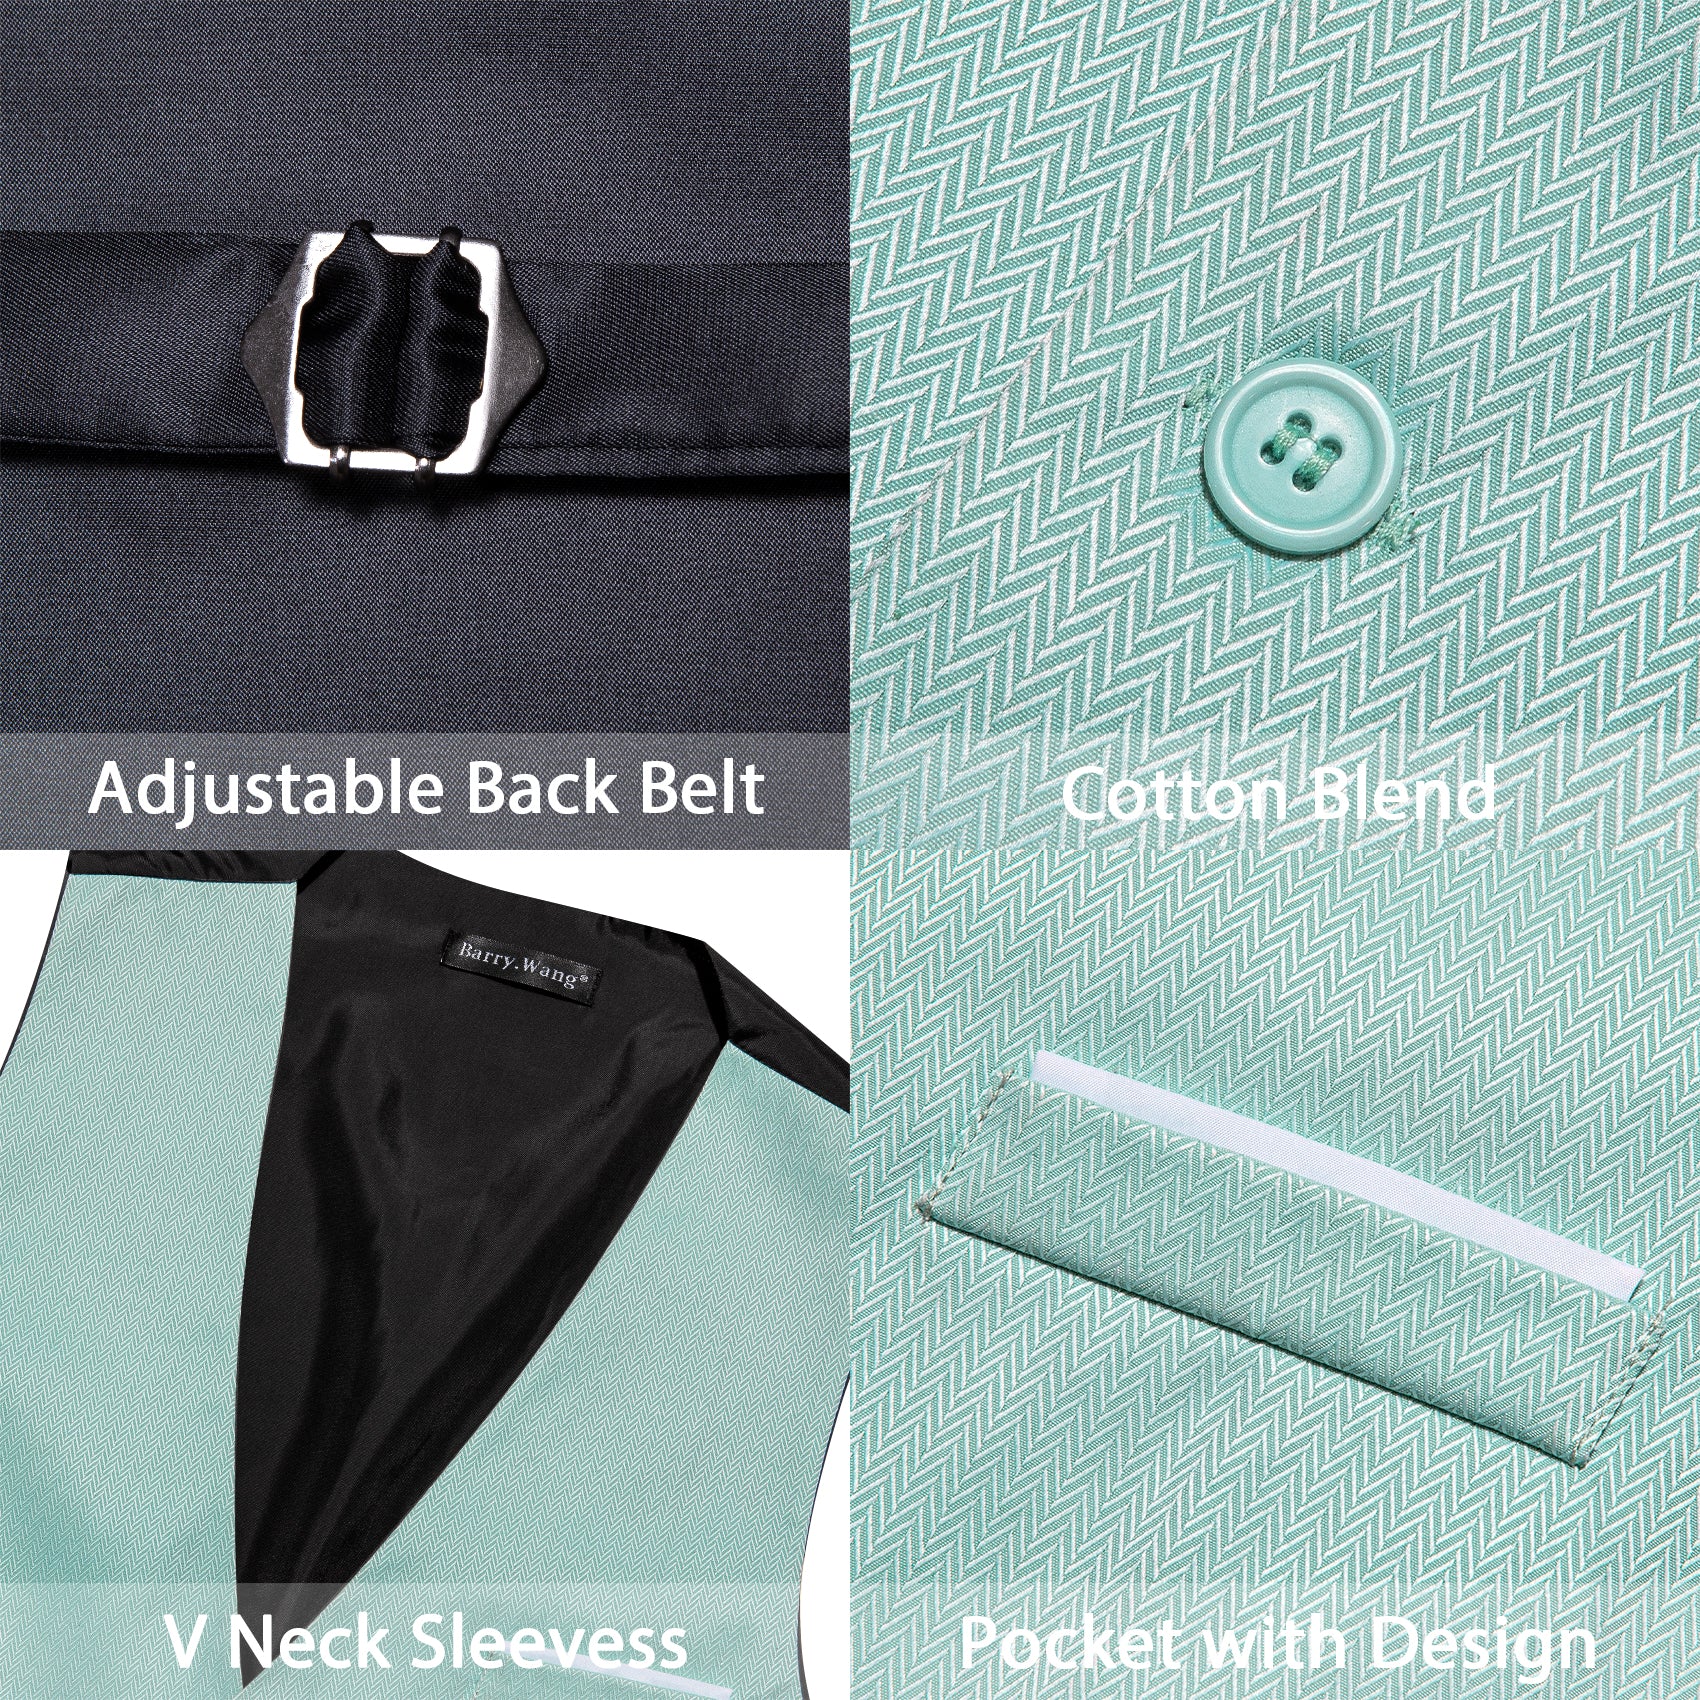 Men's Light Green Solid Vest Suit for Business